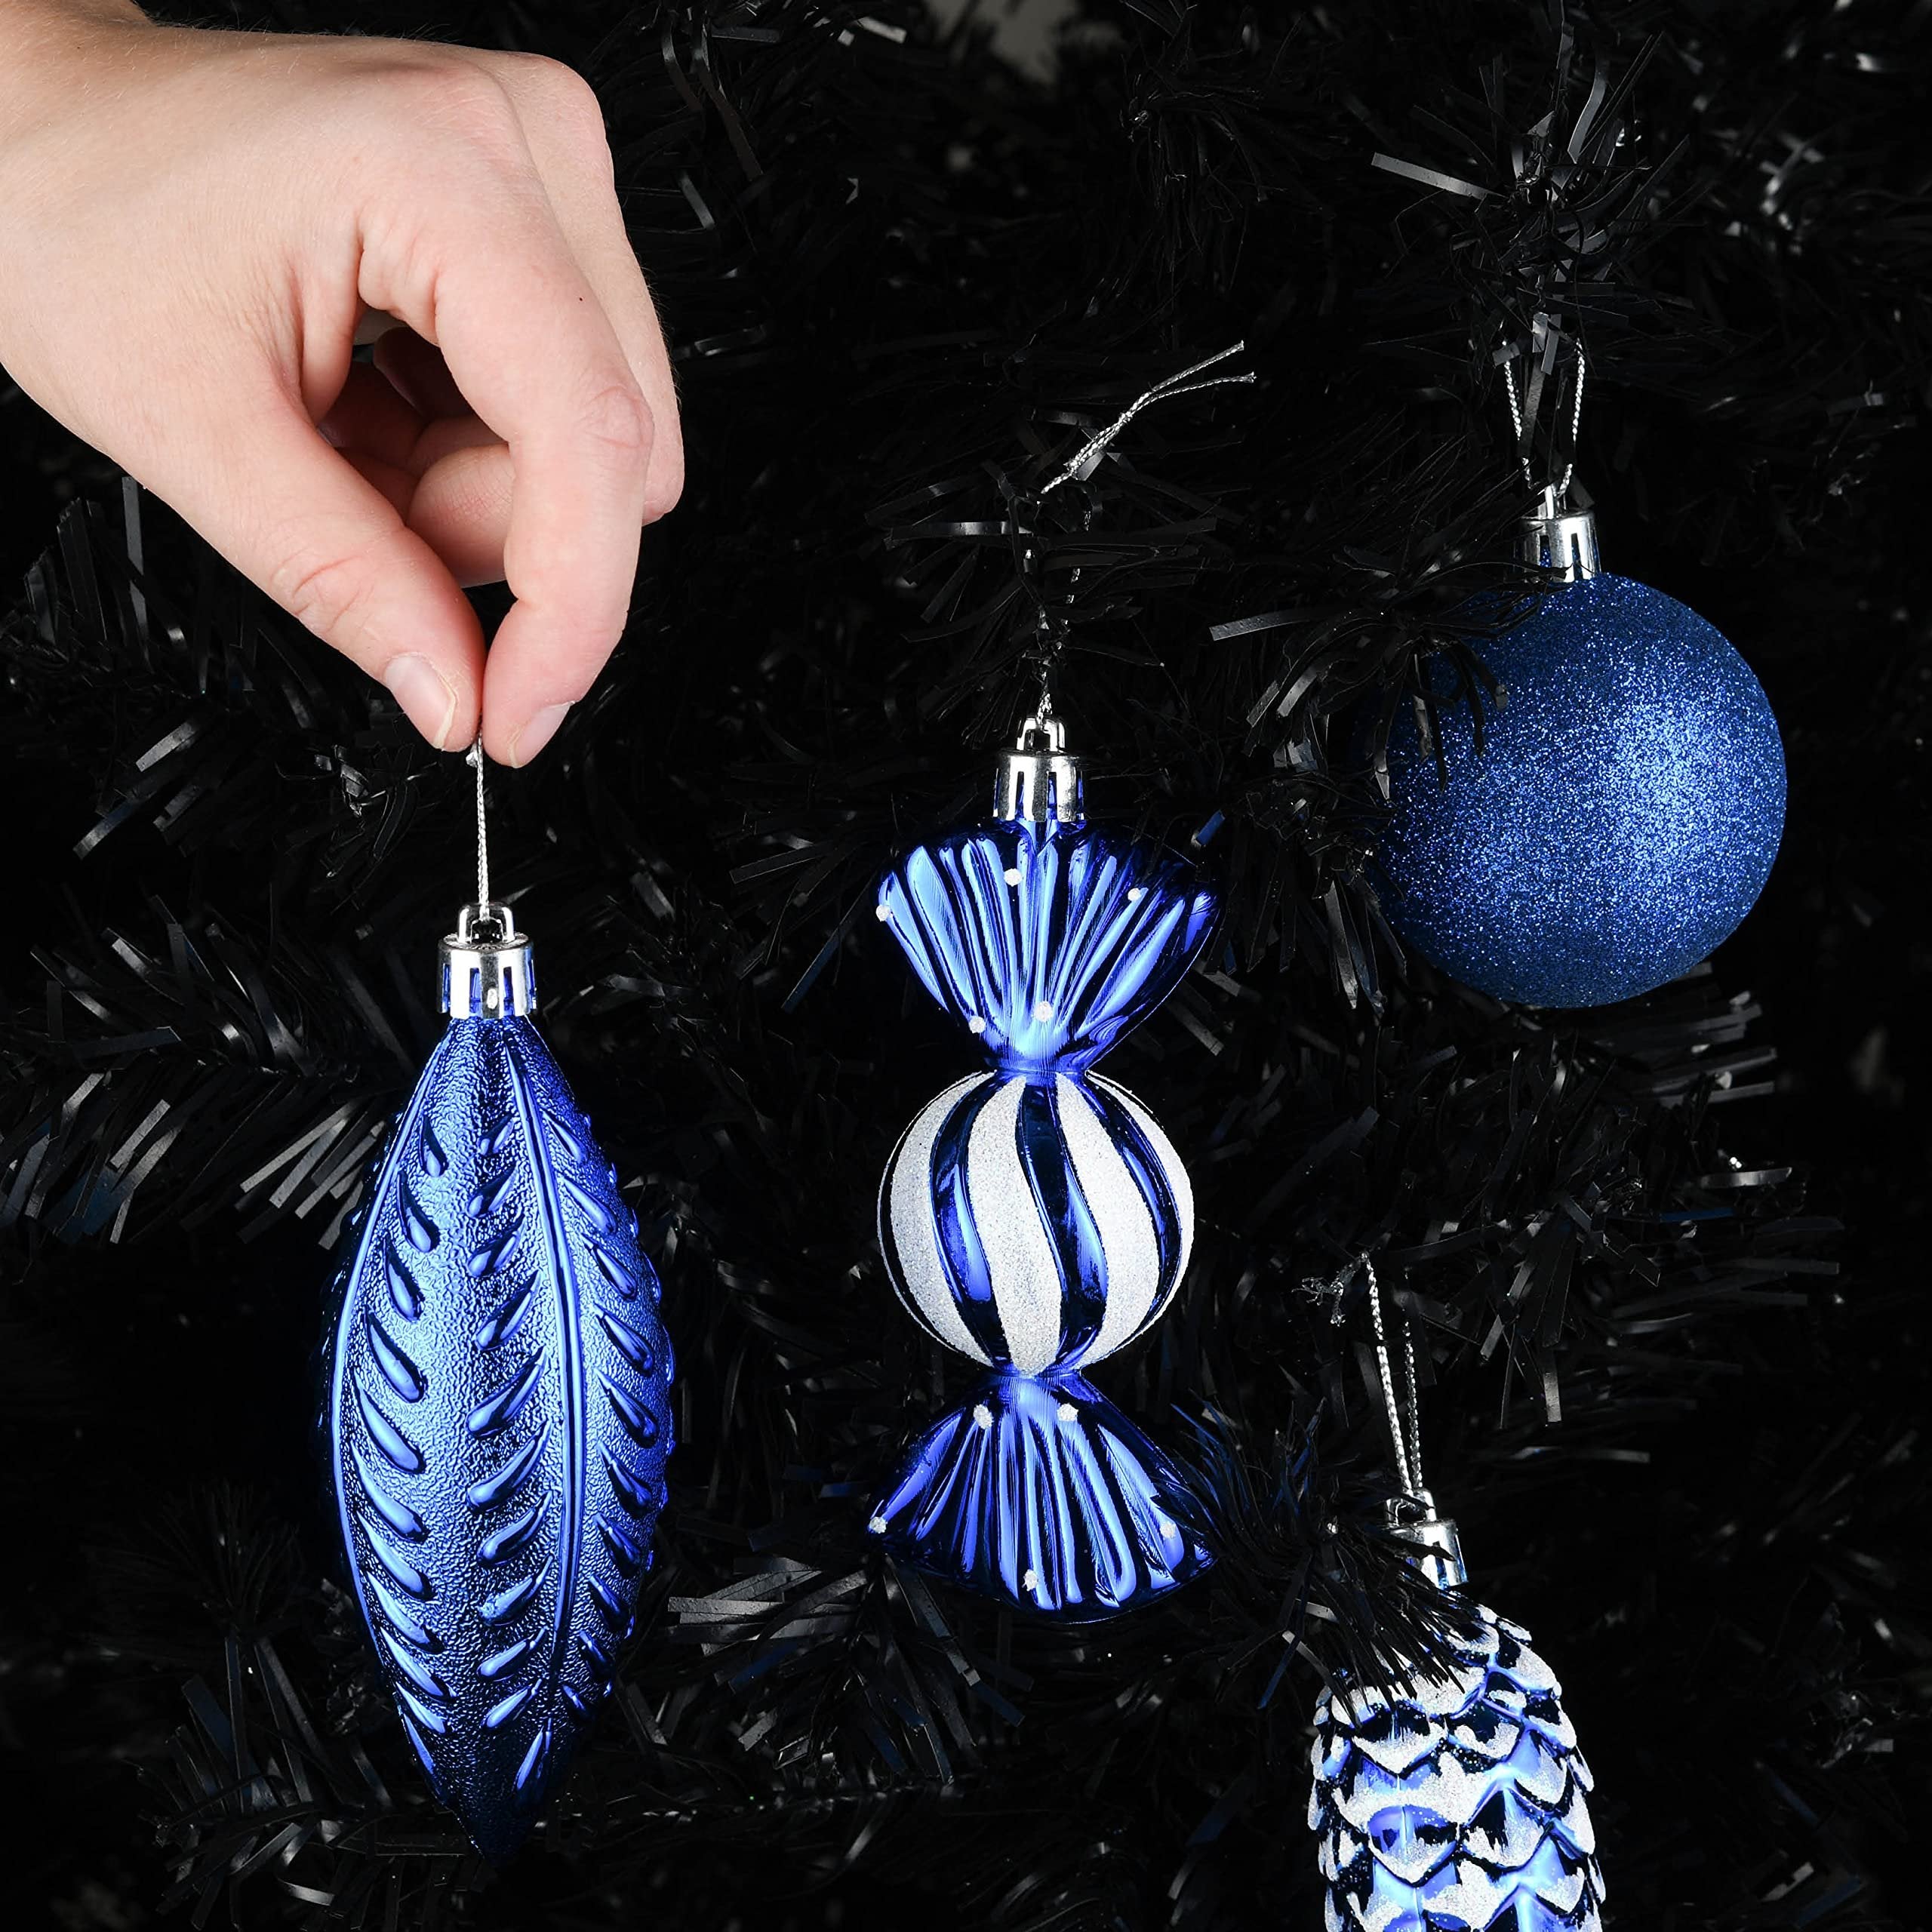 Prextex Christmas Tree Ball Ornaments - Blue Christmas Ornaments Set for Christmas, Holiday, Wreath & Party Decorations (24 pcs - Small, Medium, Large) Shatterproof